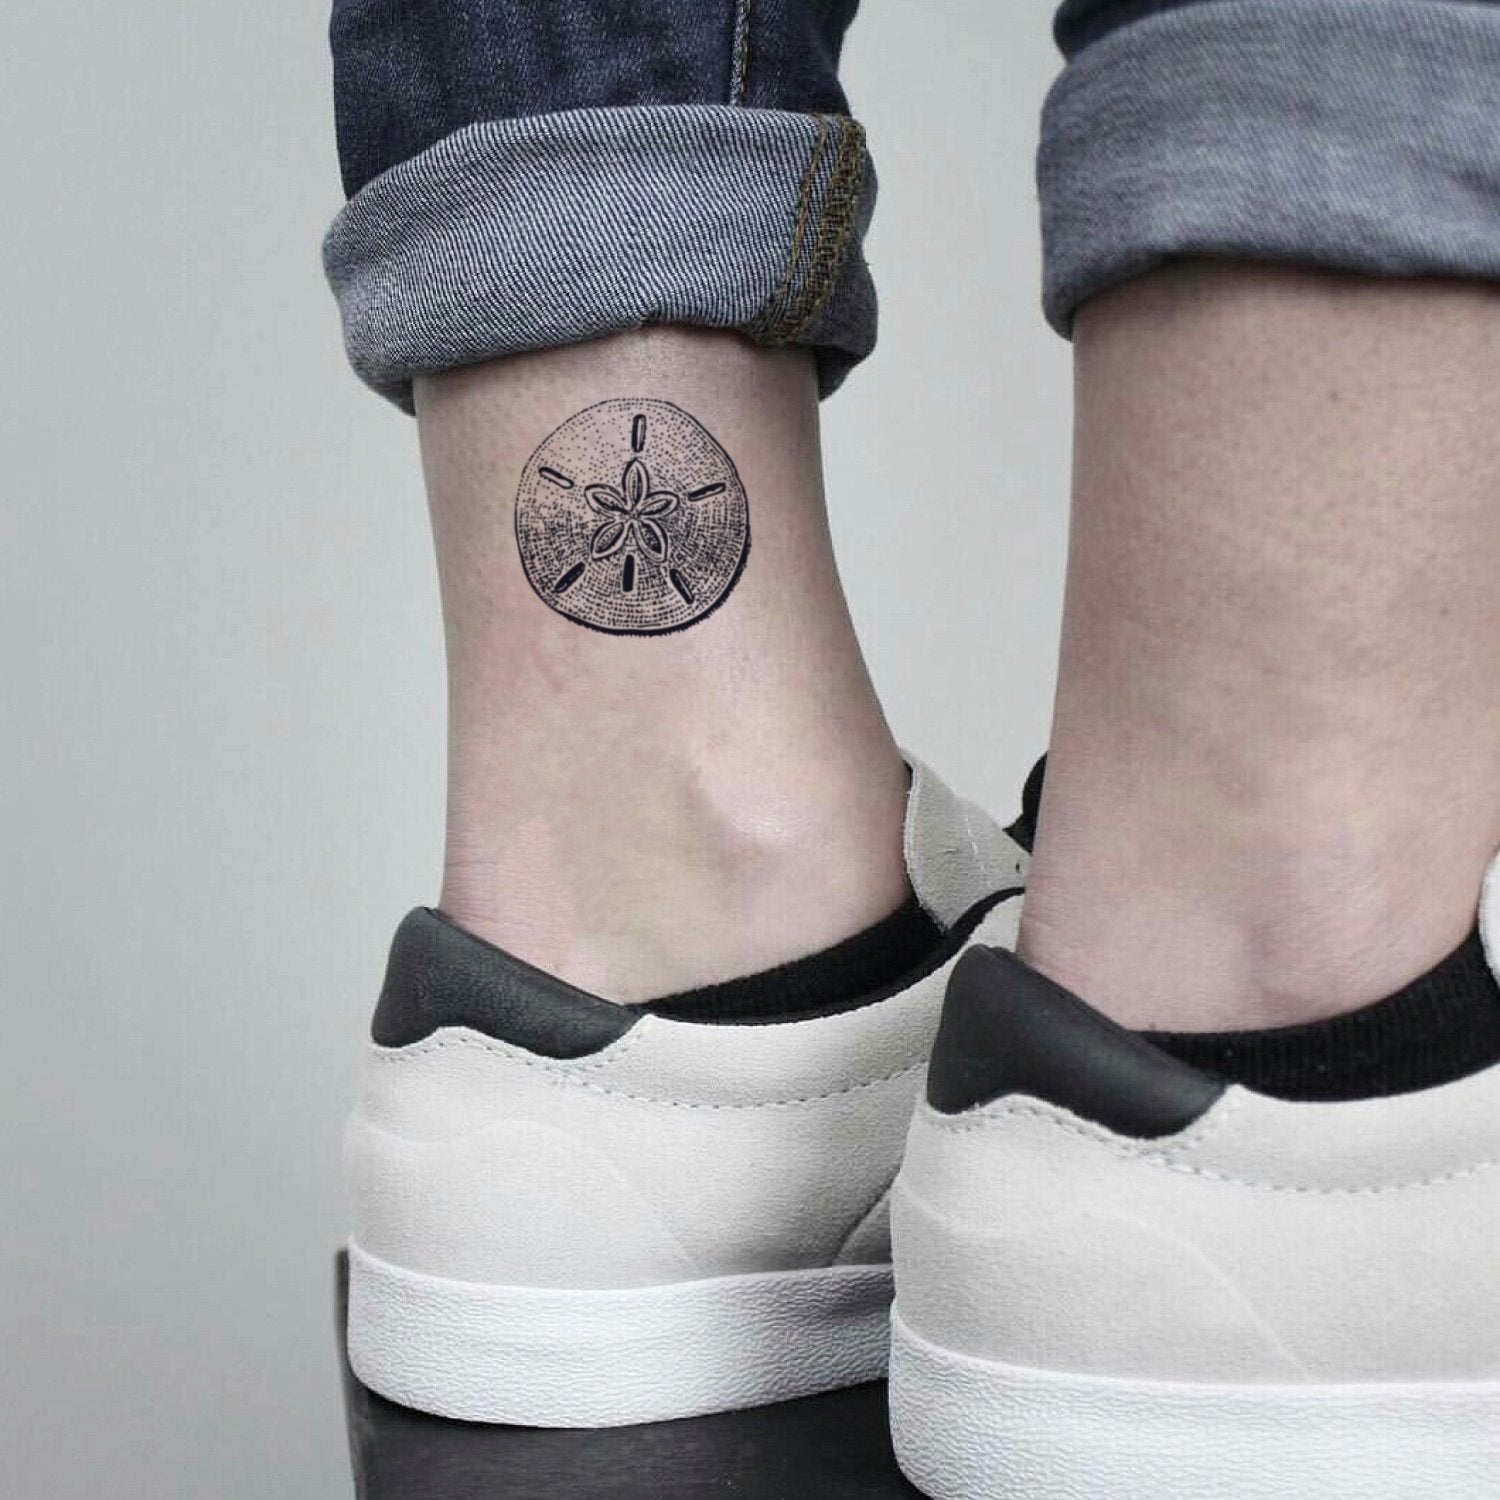 fake small sand dollar illustrative temporary tattoo sticker design idea on ankle